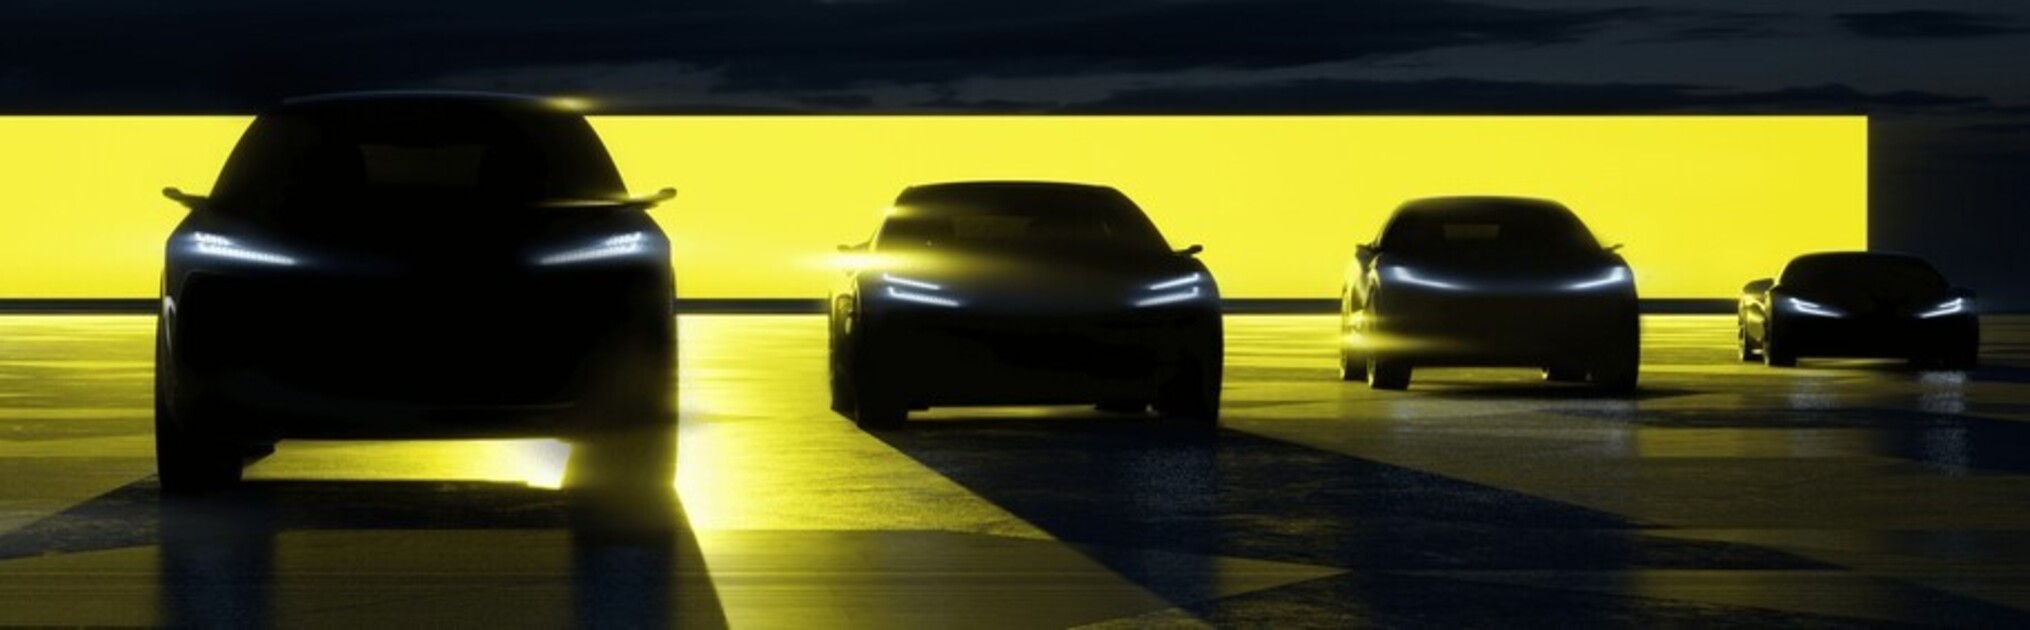 Lotus da un adelanto de 4 modelos a futuro, todos ellos eléctricos